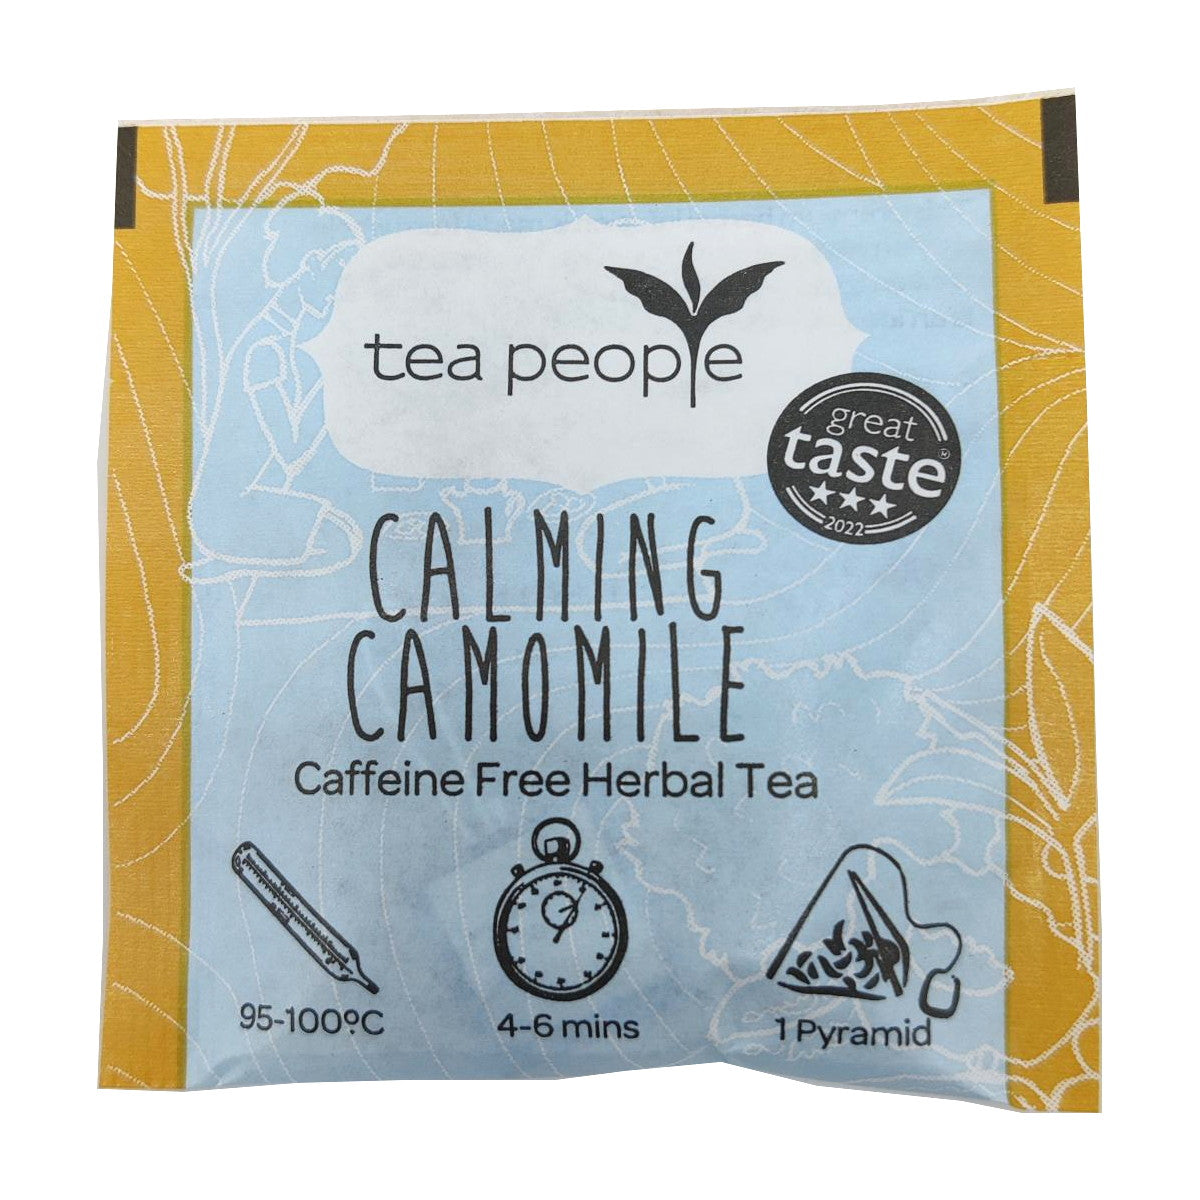 Calming Camomile - Herbal Tea Envelopes